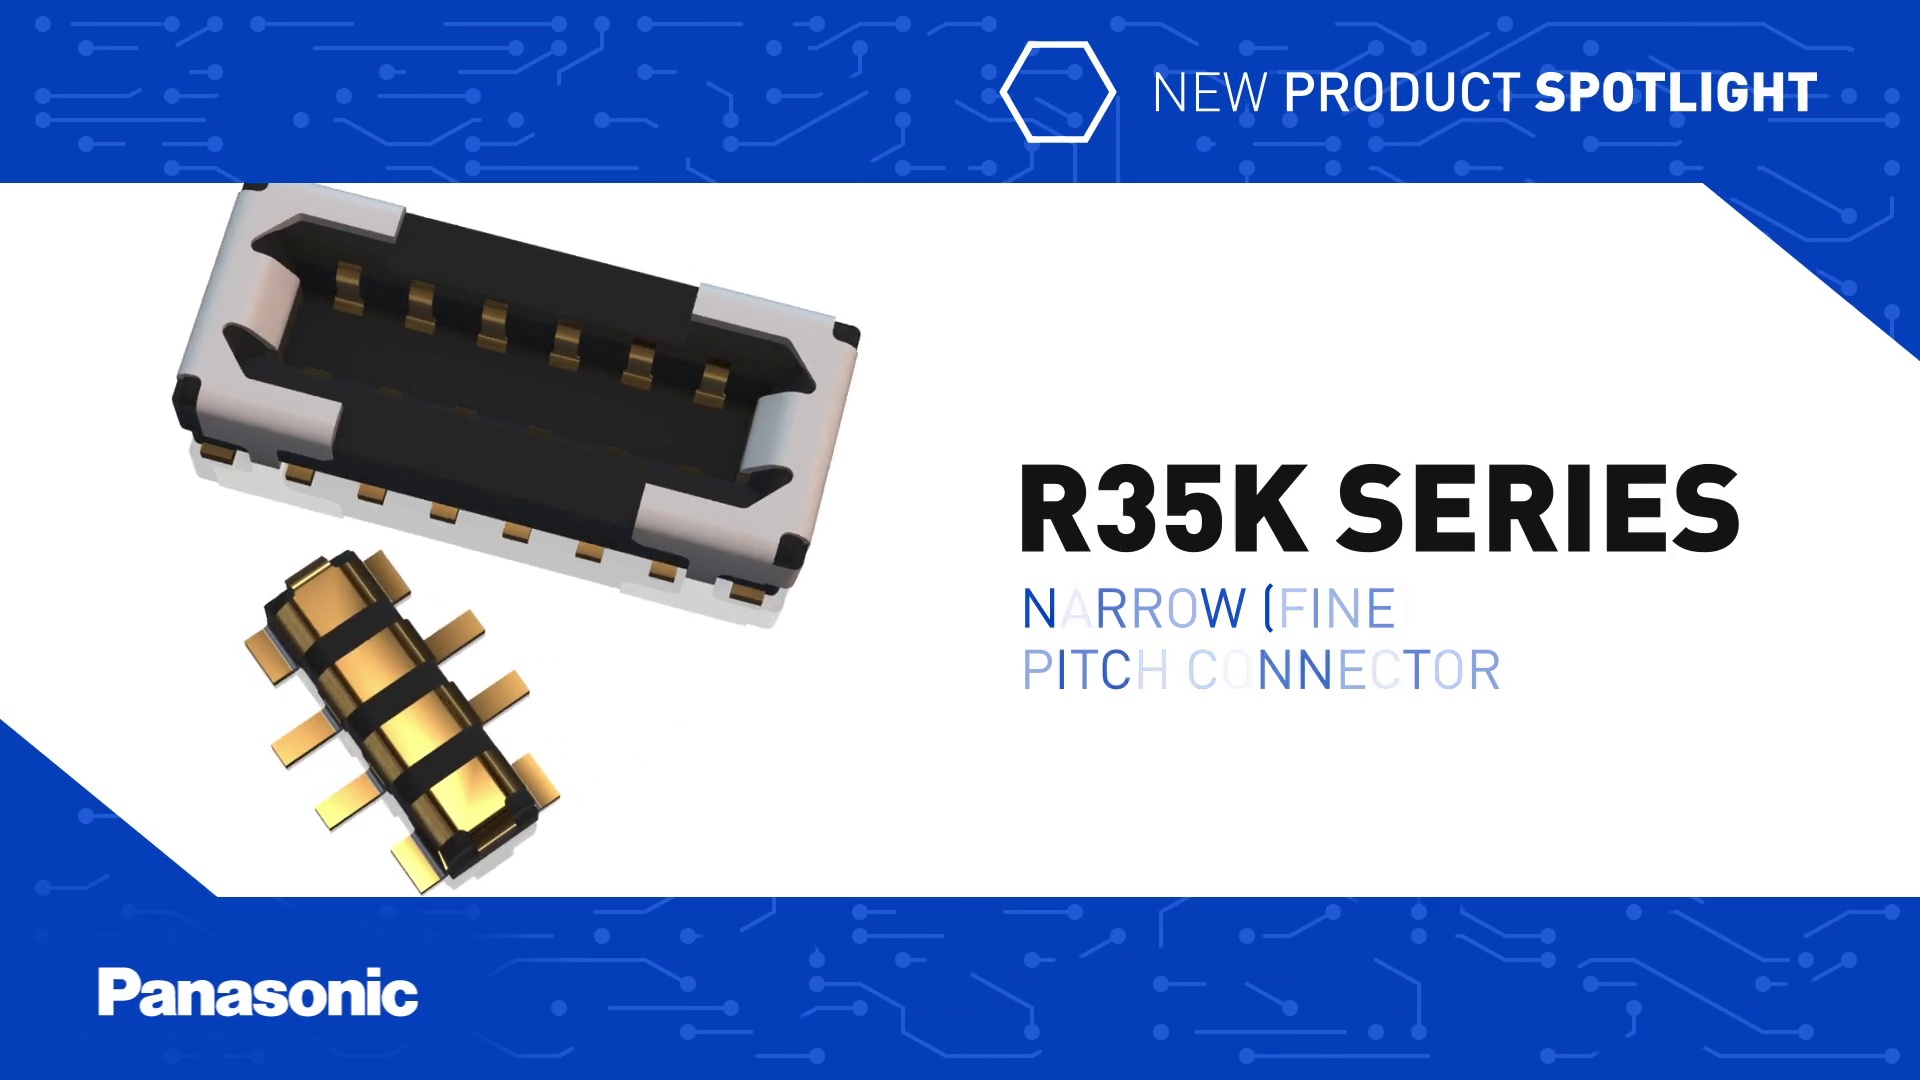 New Product Spotlight: R35K Series Narrow (Fine) Pitch Connectors